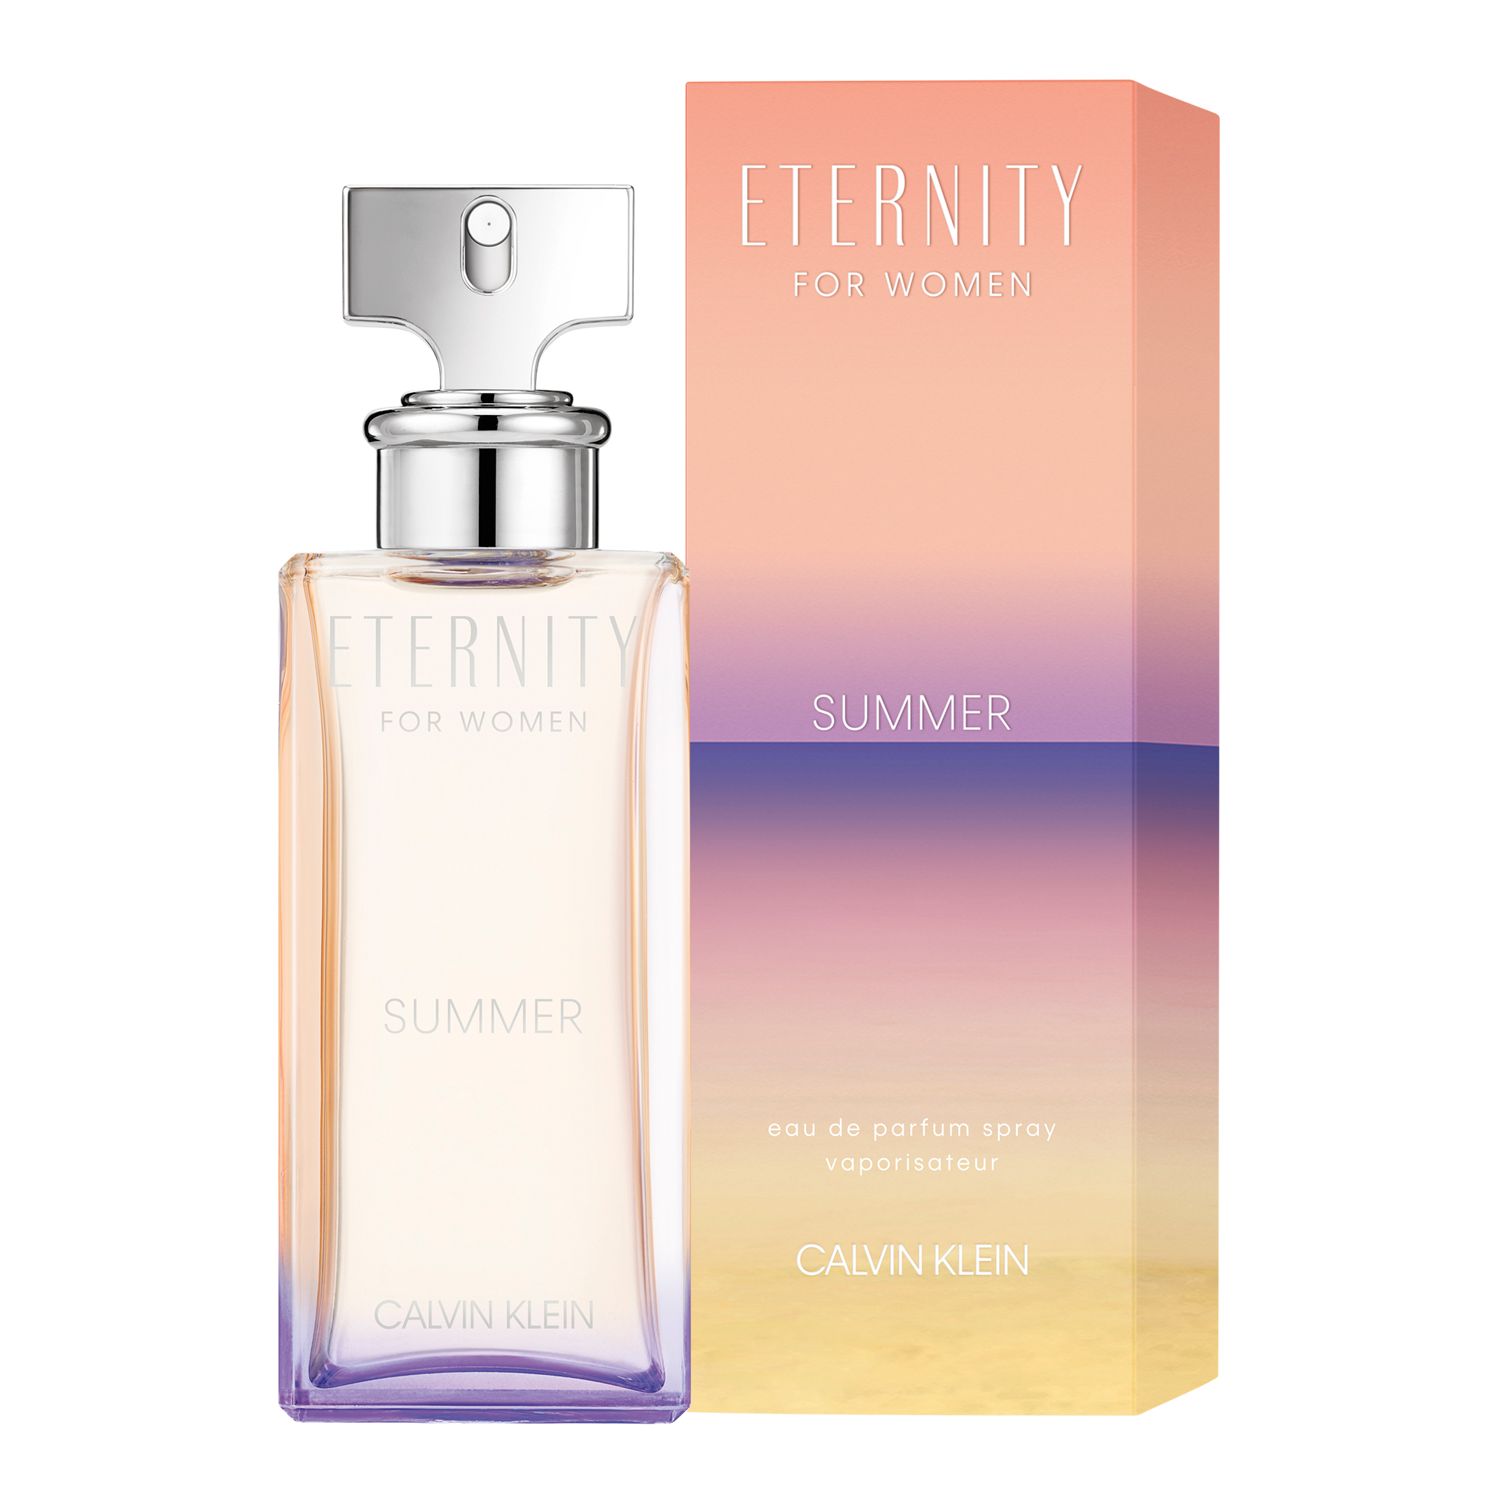 ck eternity women's perfume